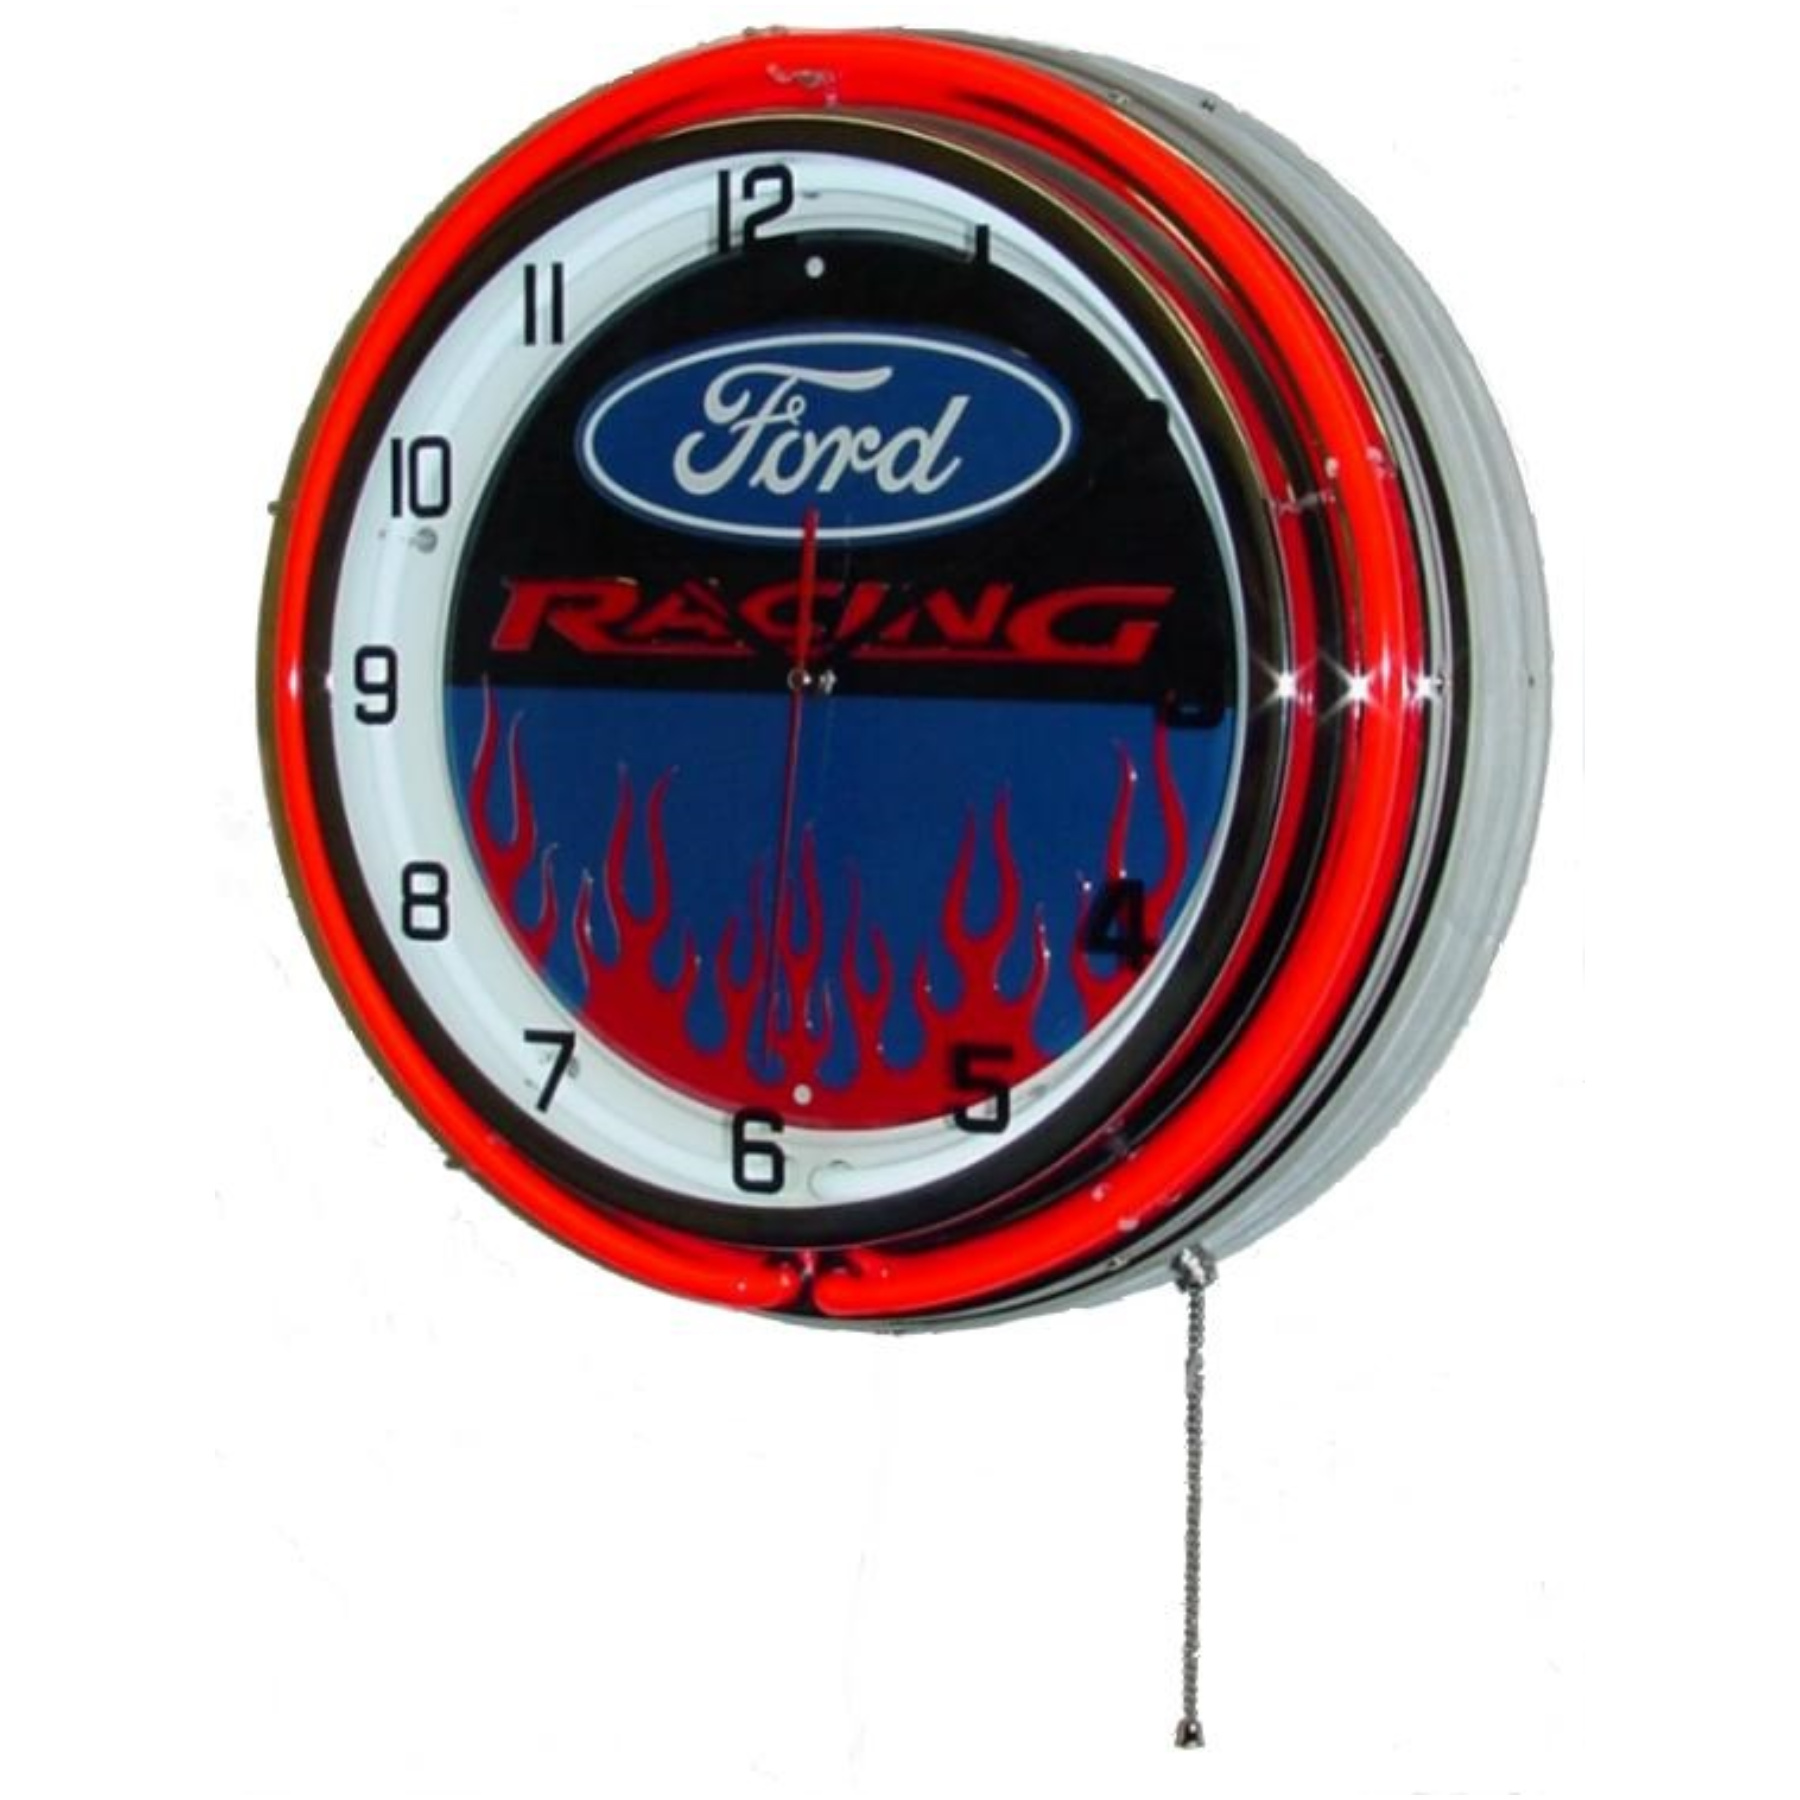 Ford racing wall clocks #8